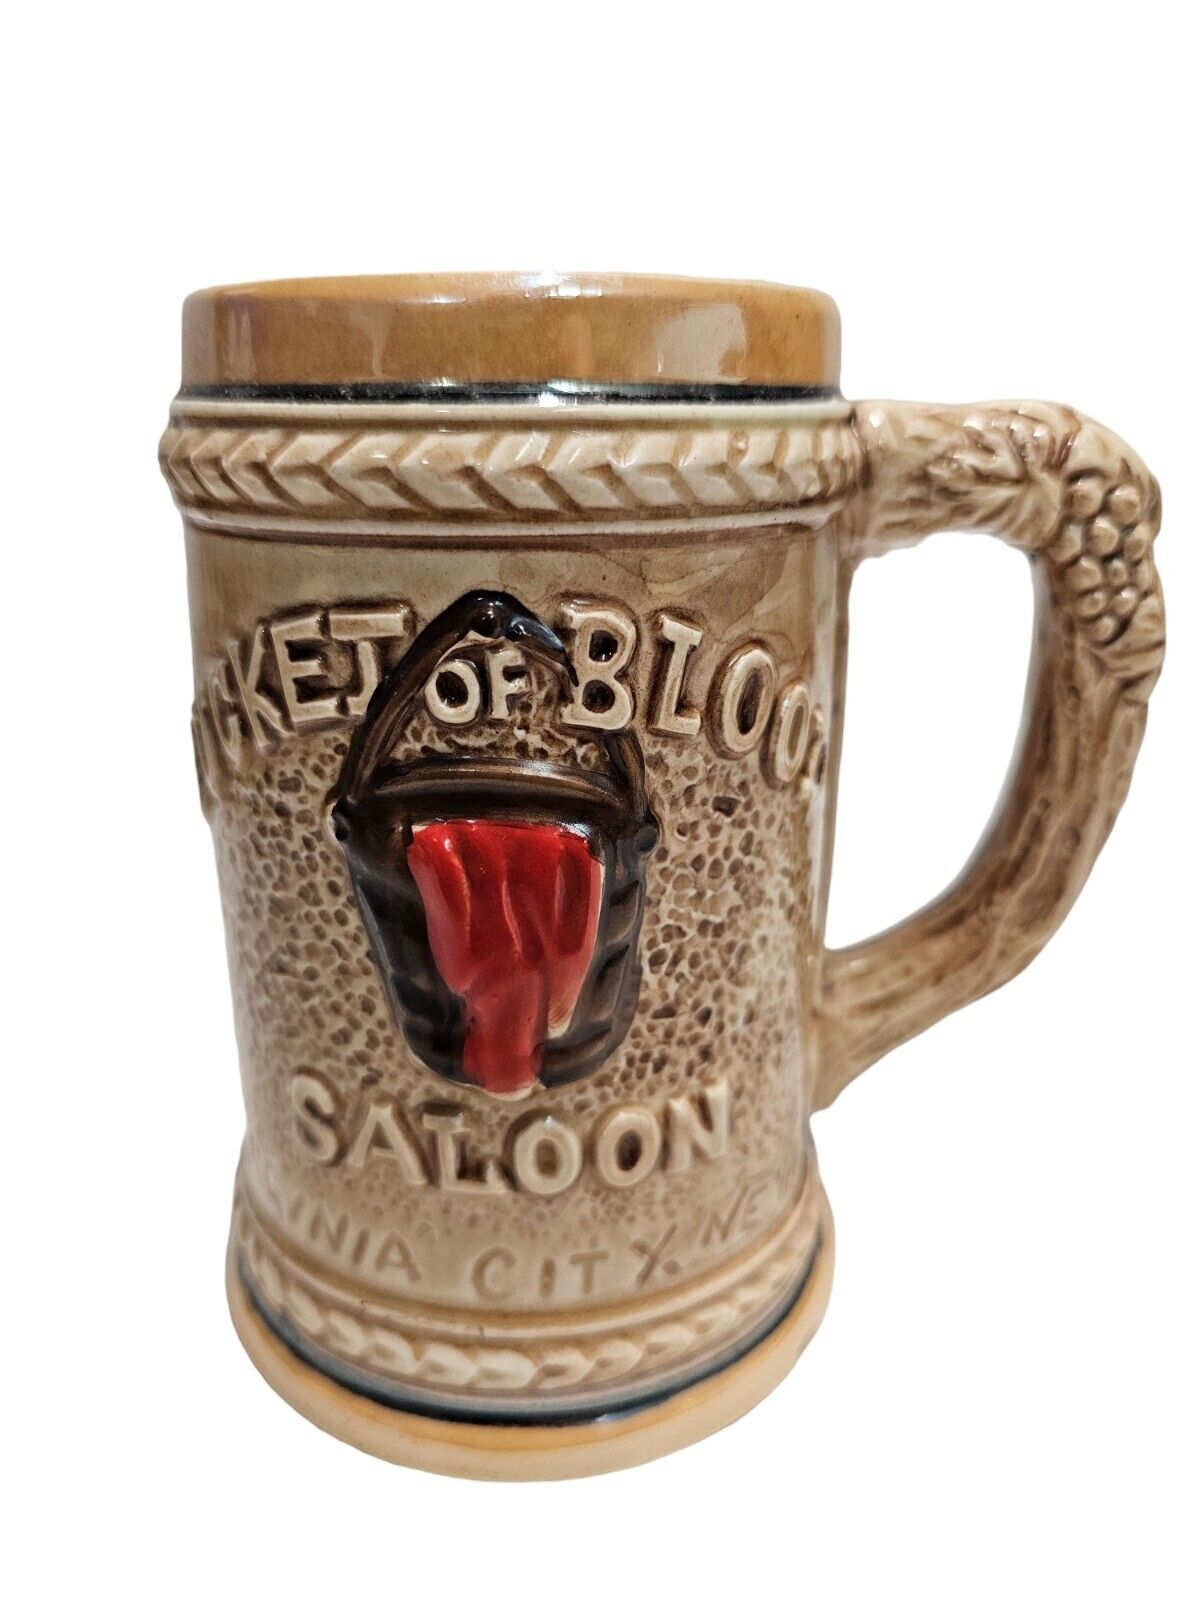 Vintage Bucket Of Blood Saloon Prospector Beer Stein Mug Virginia City Nevada